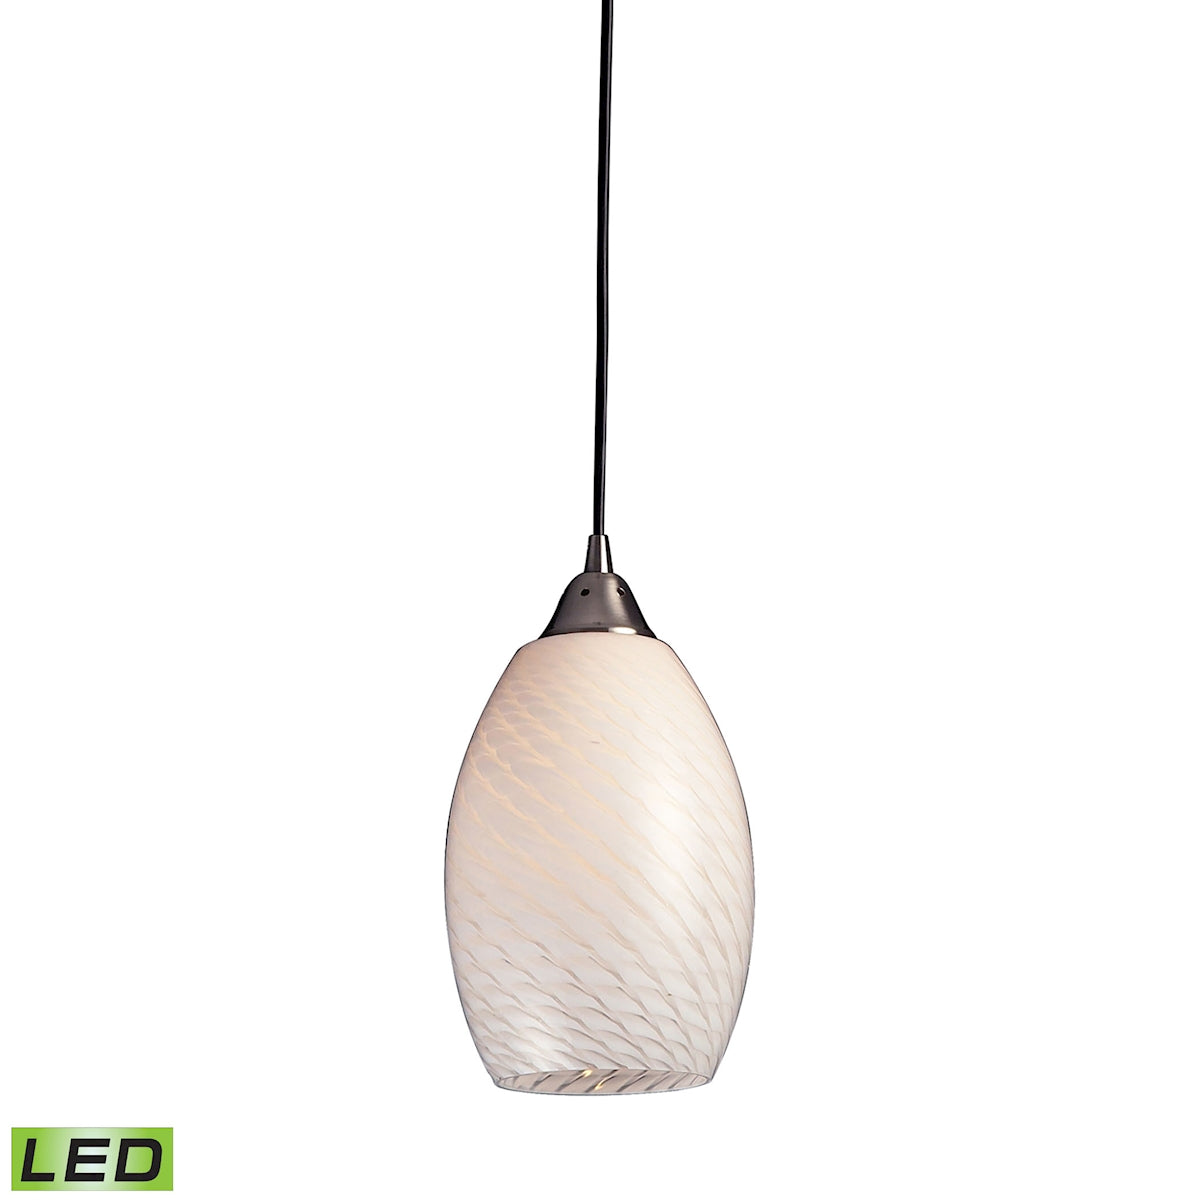 ELK Lighting 517-1WS-LED Mulinello 1-Light Mini Pendant in Satin Nickel with White Swirl Glass - Includes LED Bulb